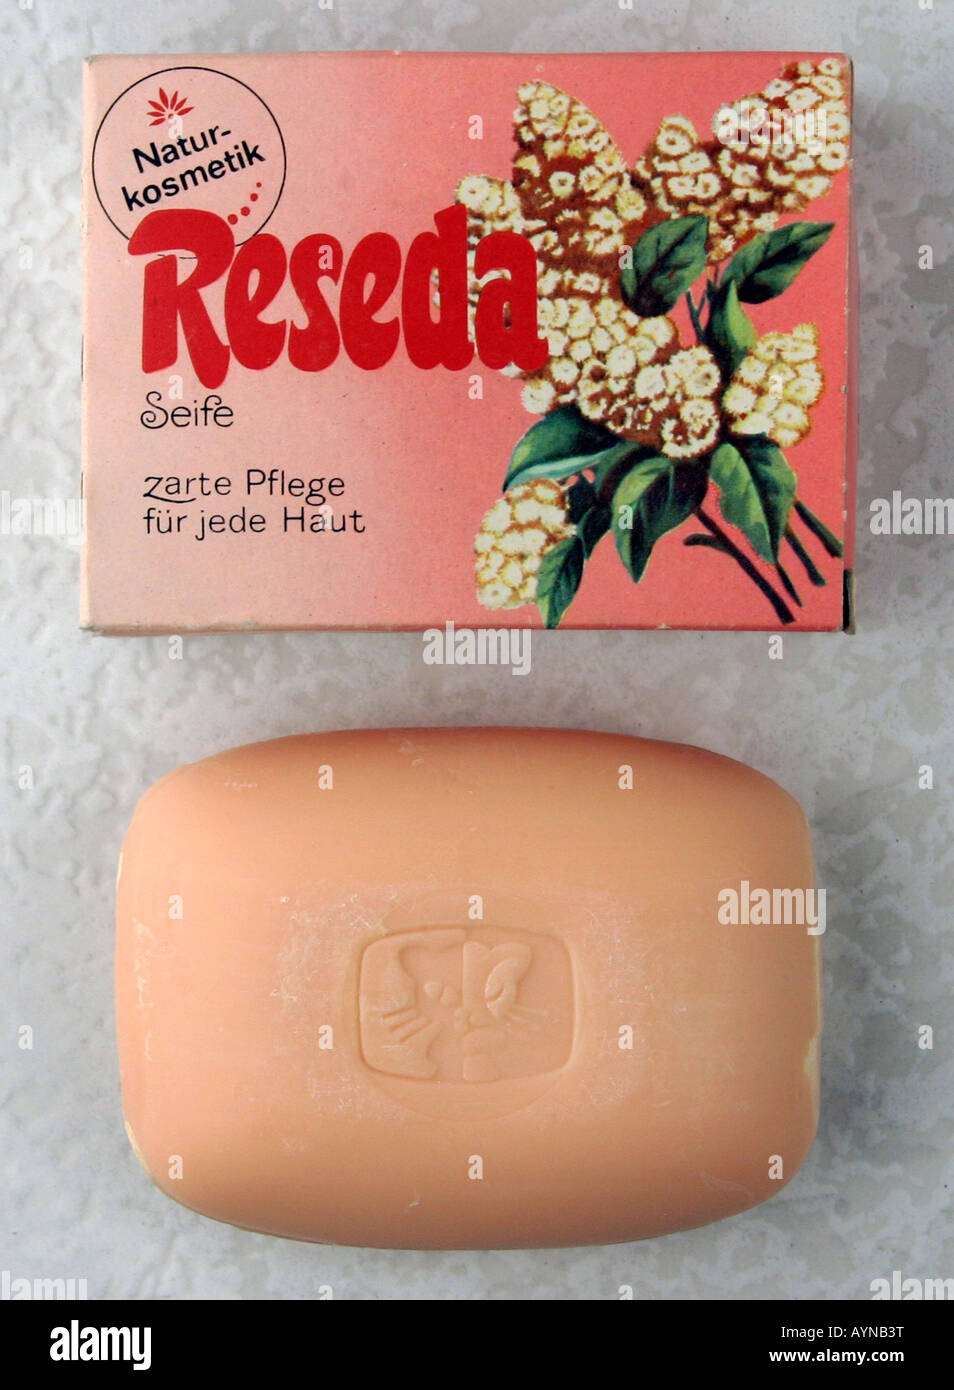 cosmetics, soap 'Reseda', produced by Seifenfabrik Riesa, GDR, 1980s, Stock Photo